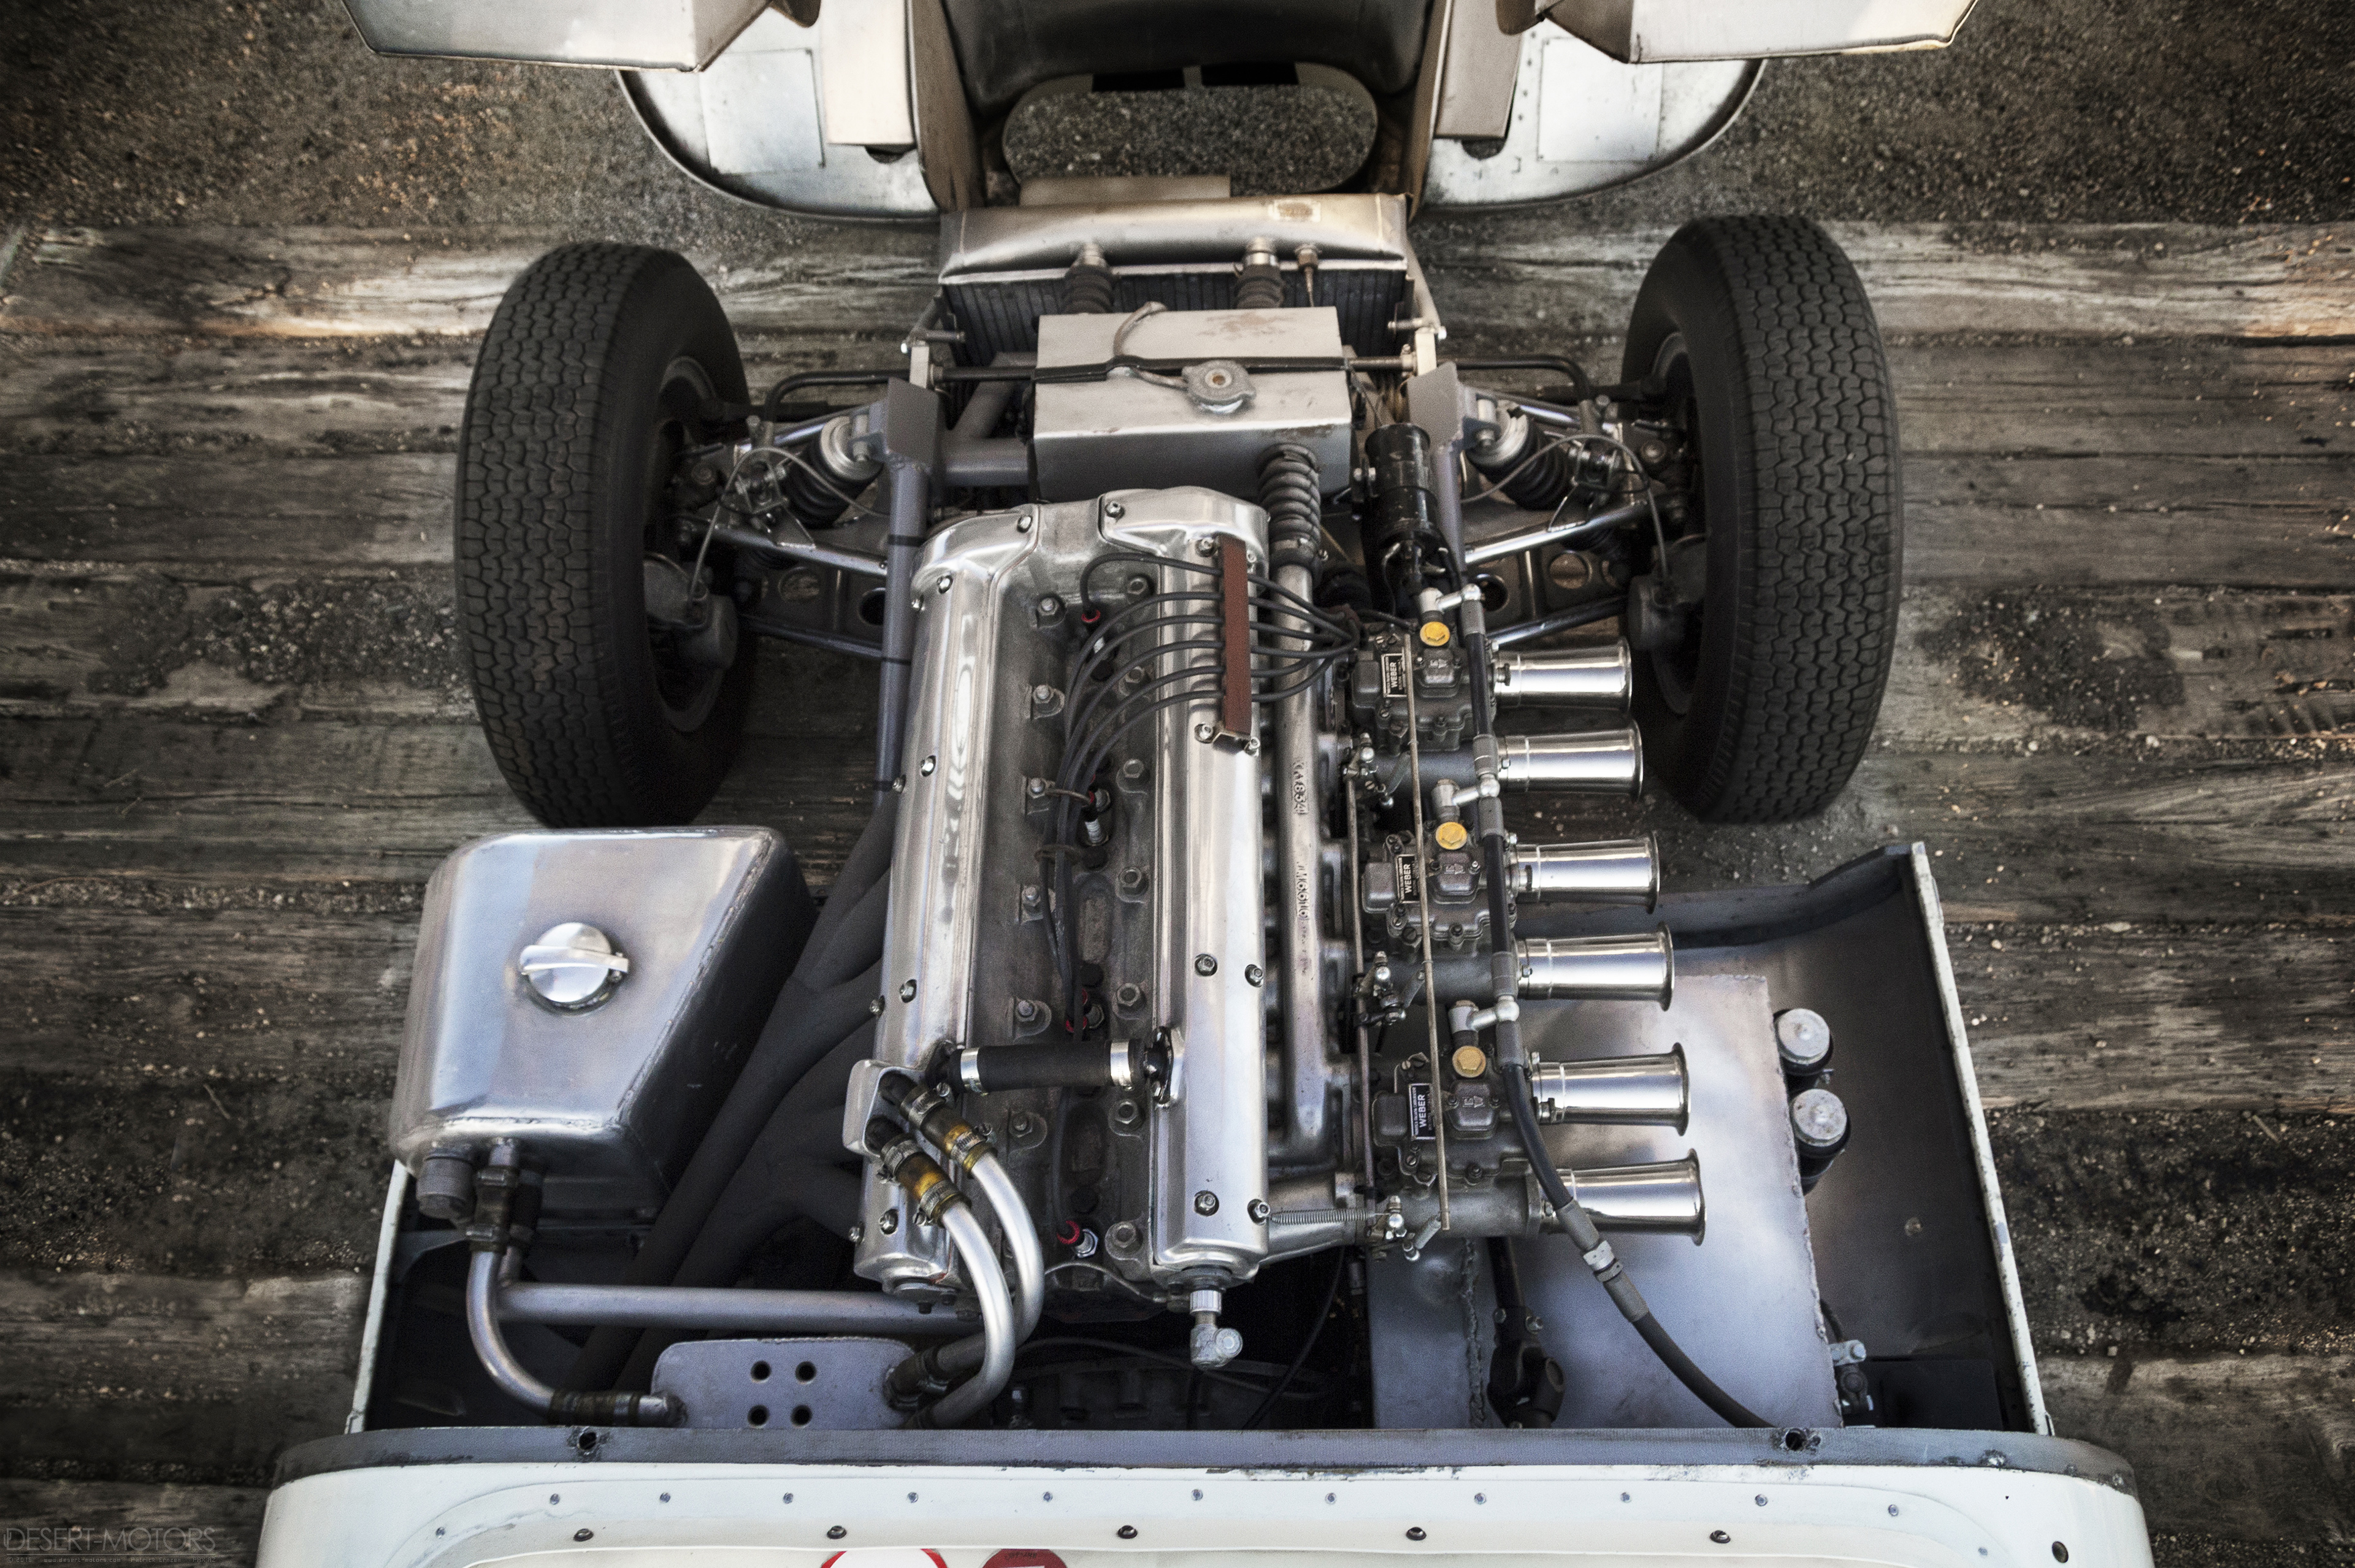 Rave Car Porn - Race car engine porn. '58 Lister-Jaguar 'Knobbly' Prototype ...